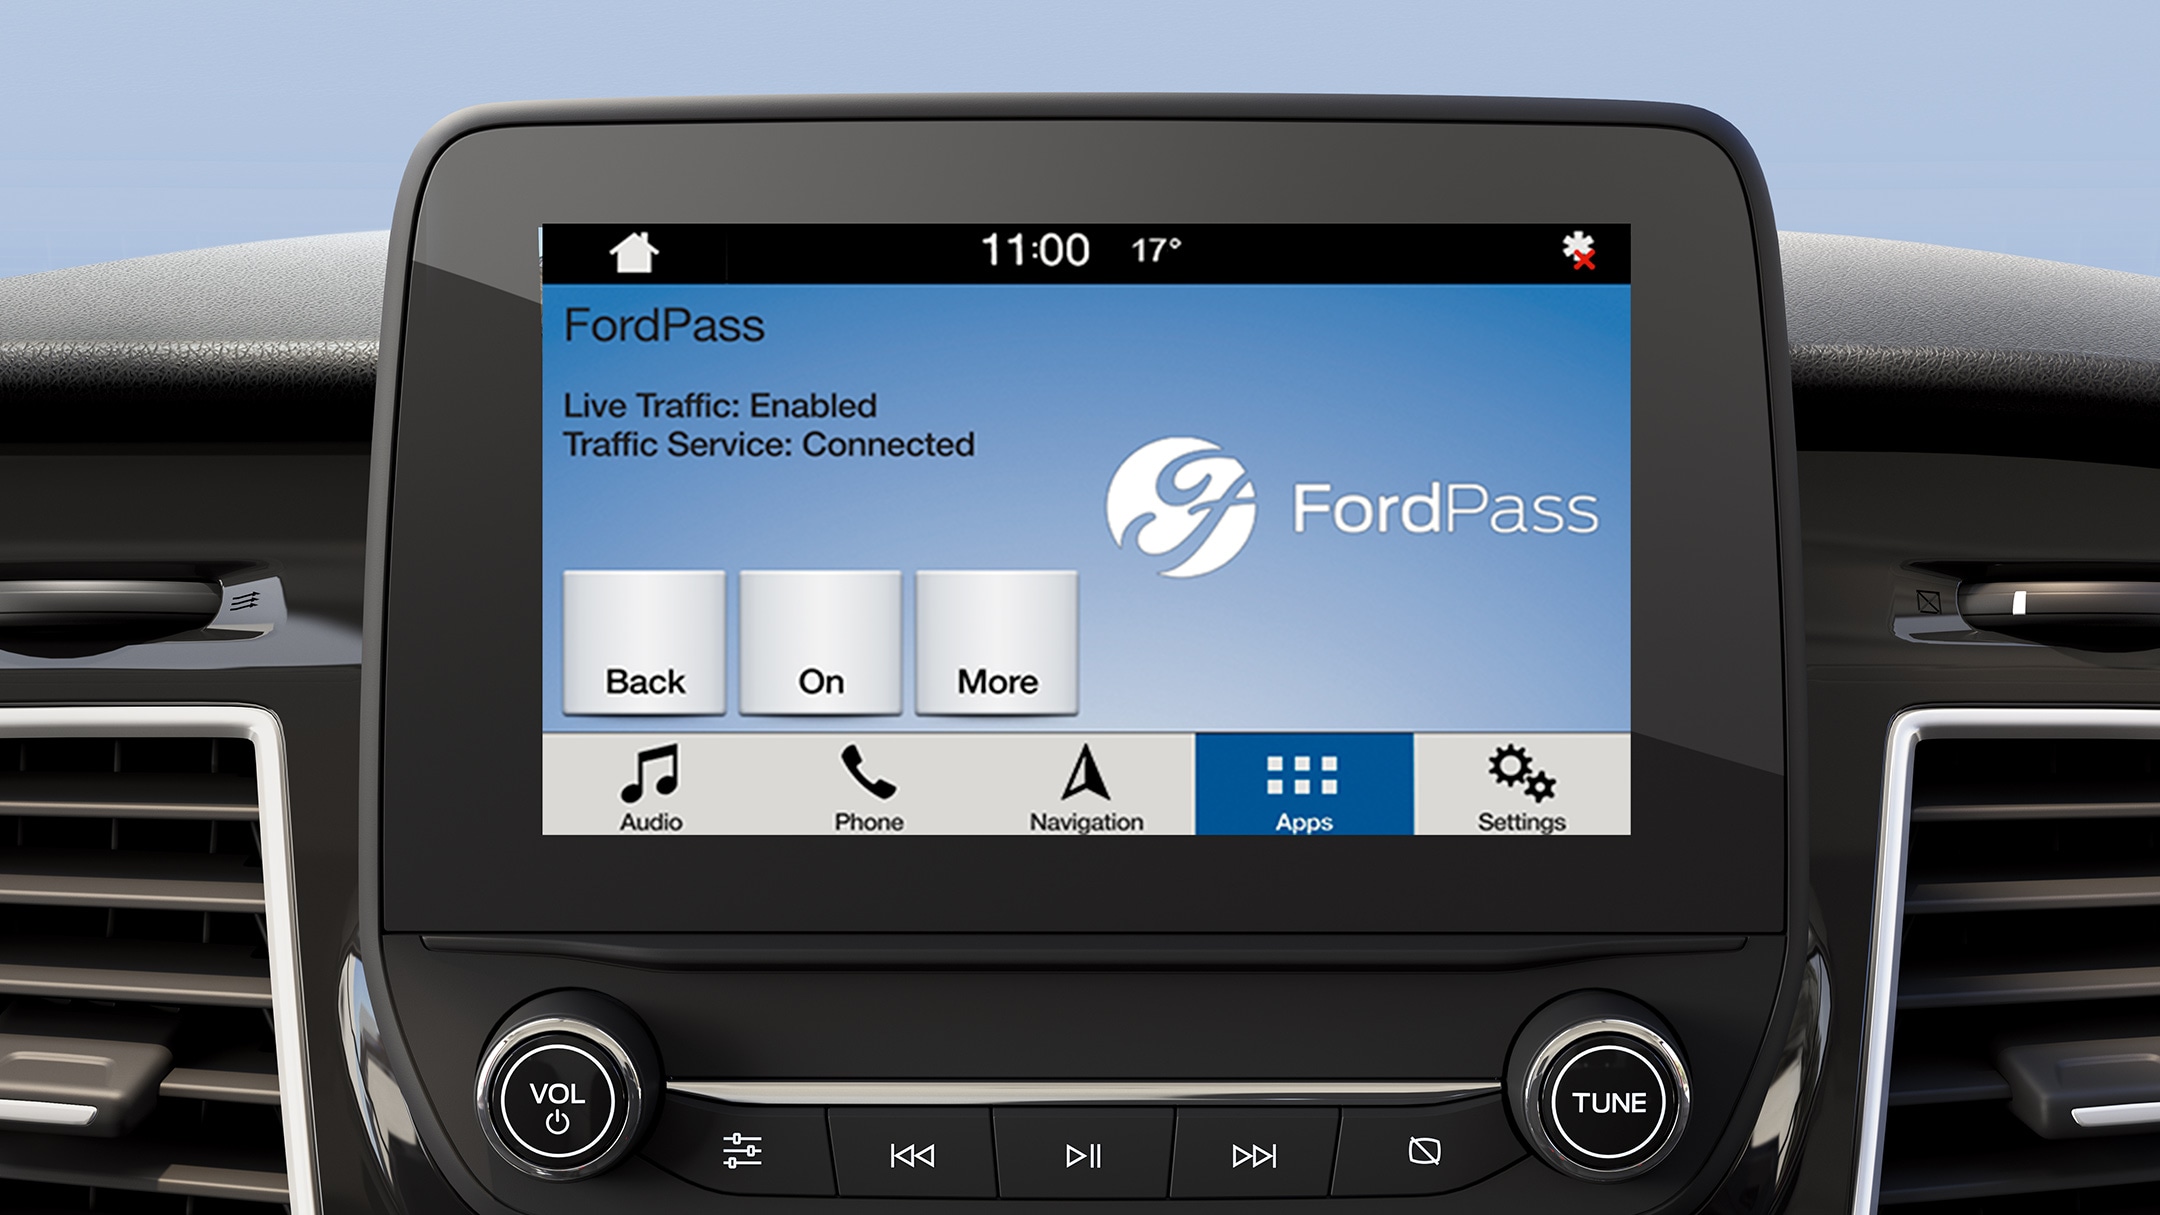 Ford Transit Multifunktionsdisplay FordPass im Detail.